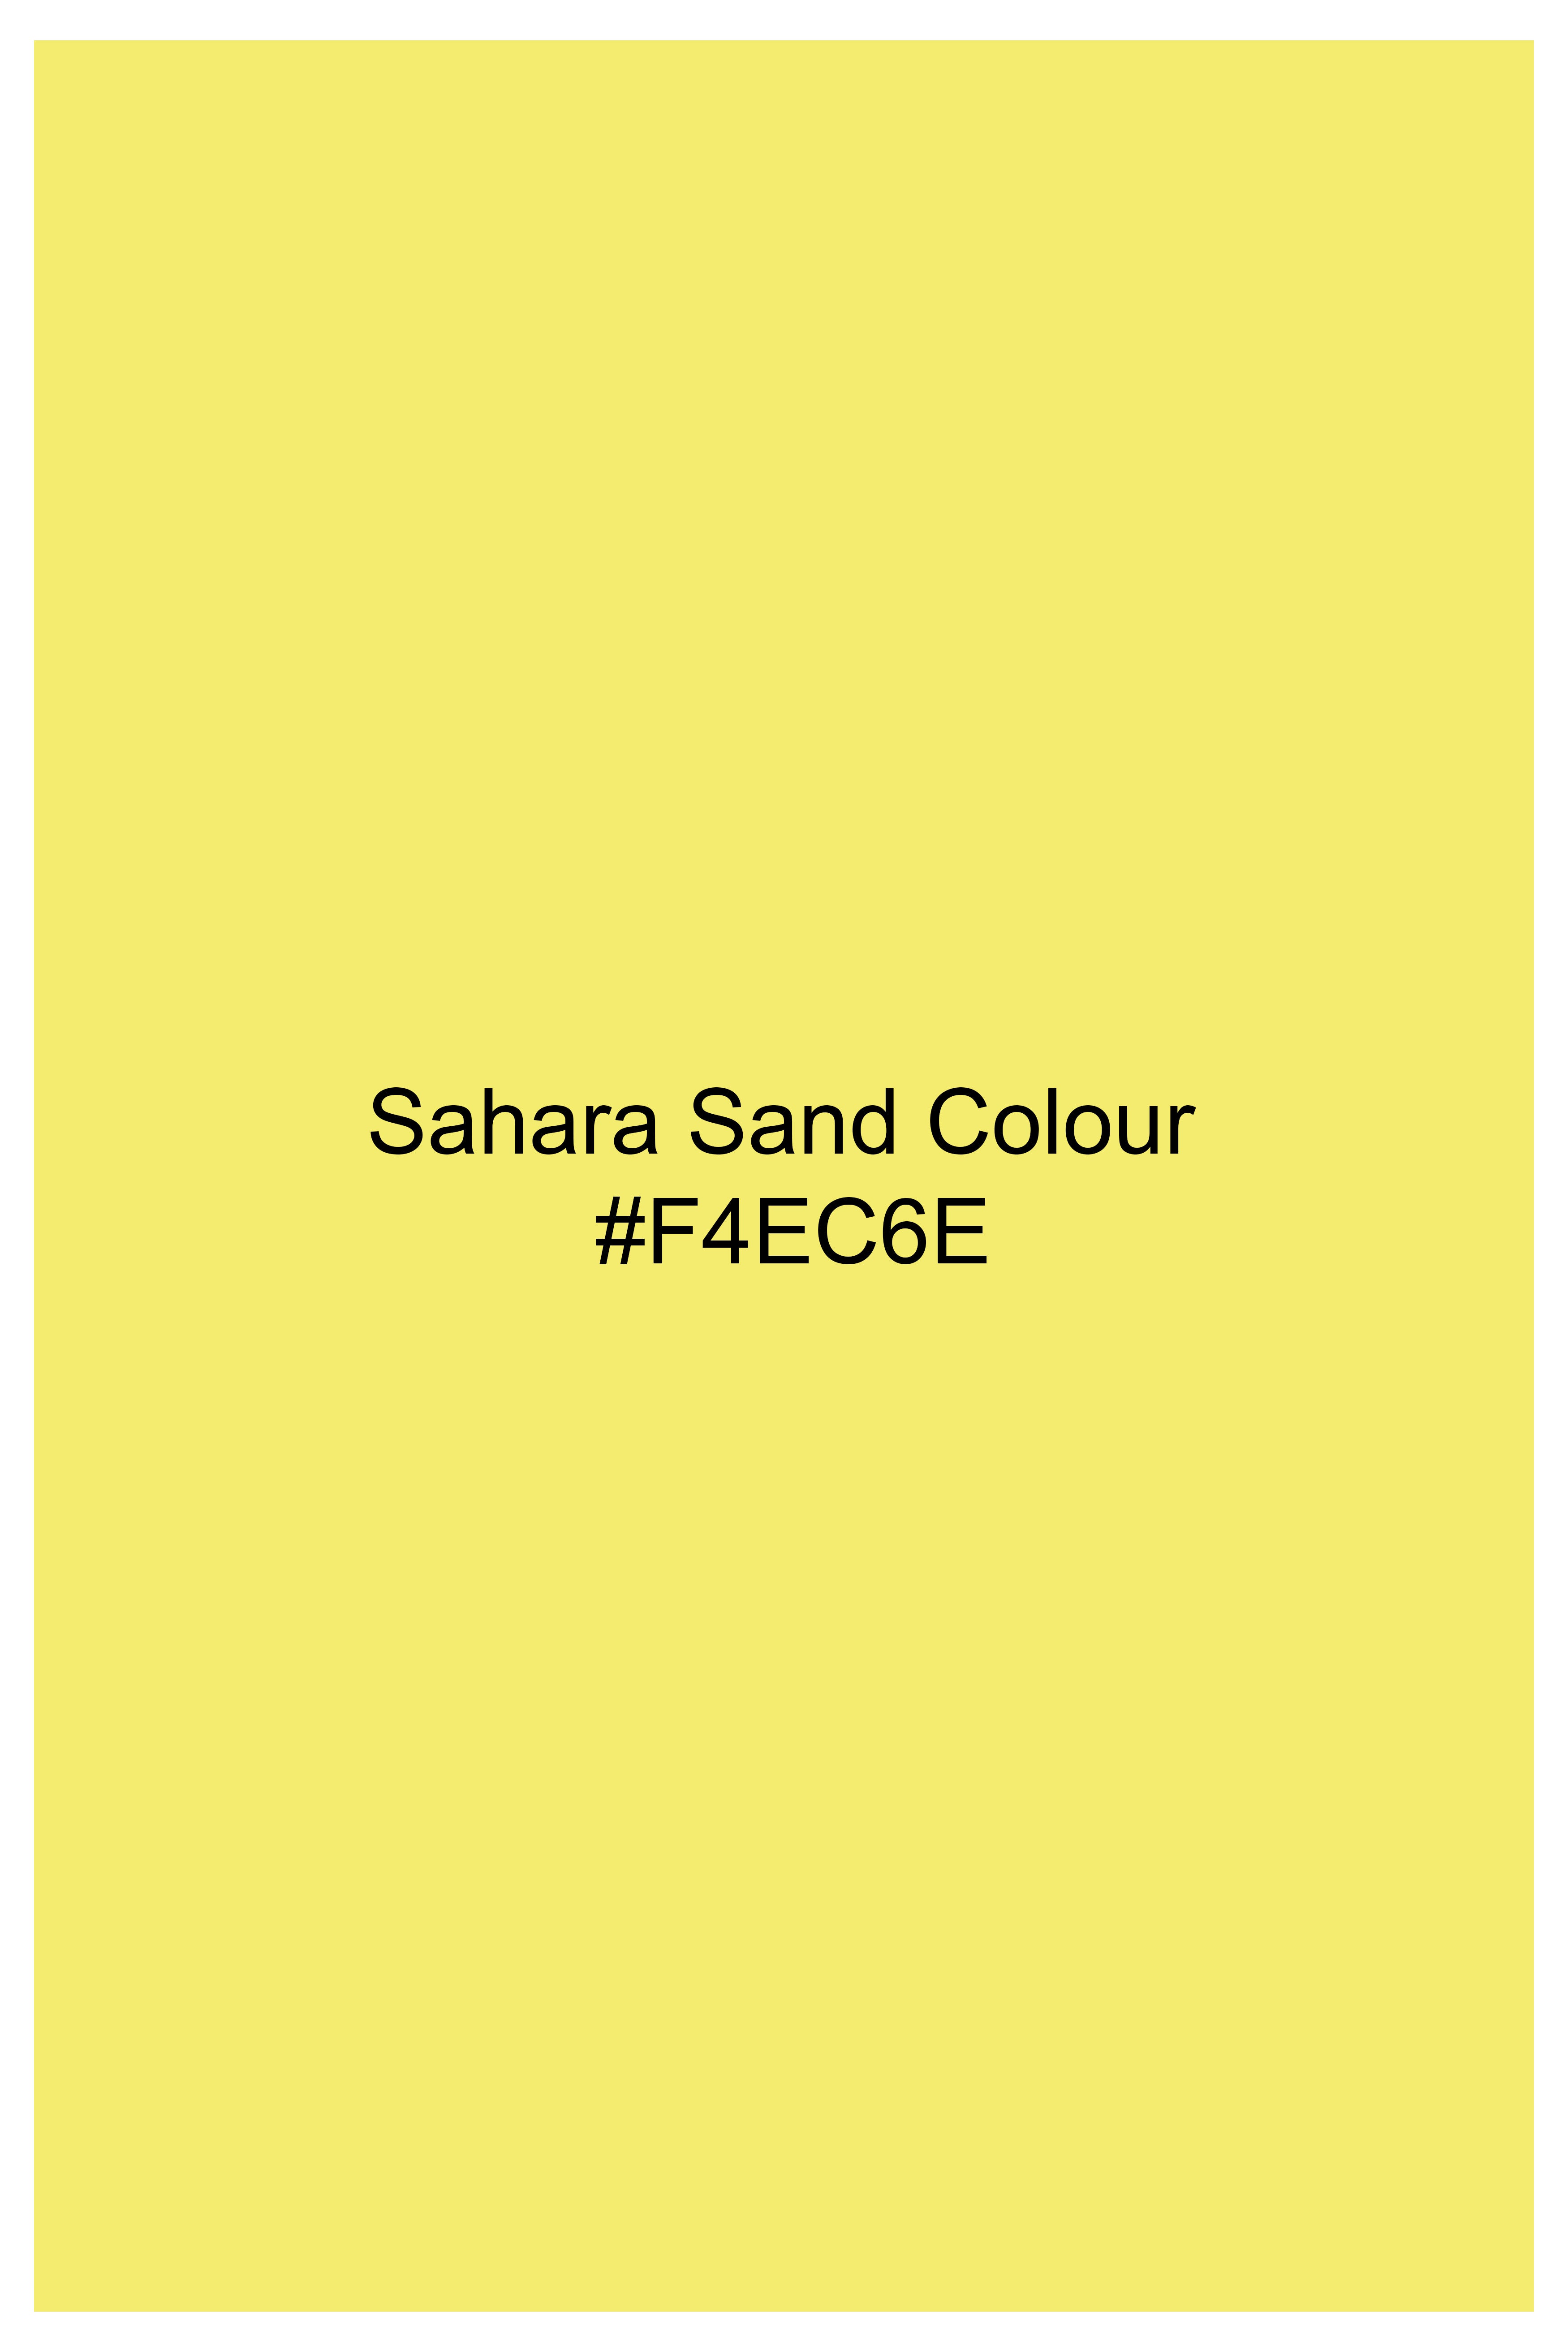 Sahara Sand Yellow Premium Cotton Pique Polo TS936-S, TS936-M, TS936-L, TS936-XL, TS936-XXL